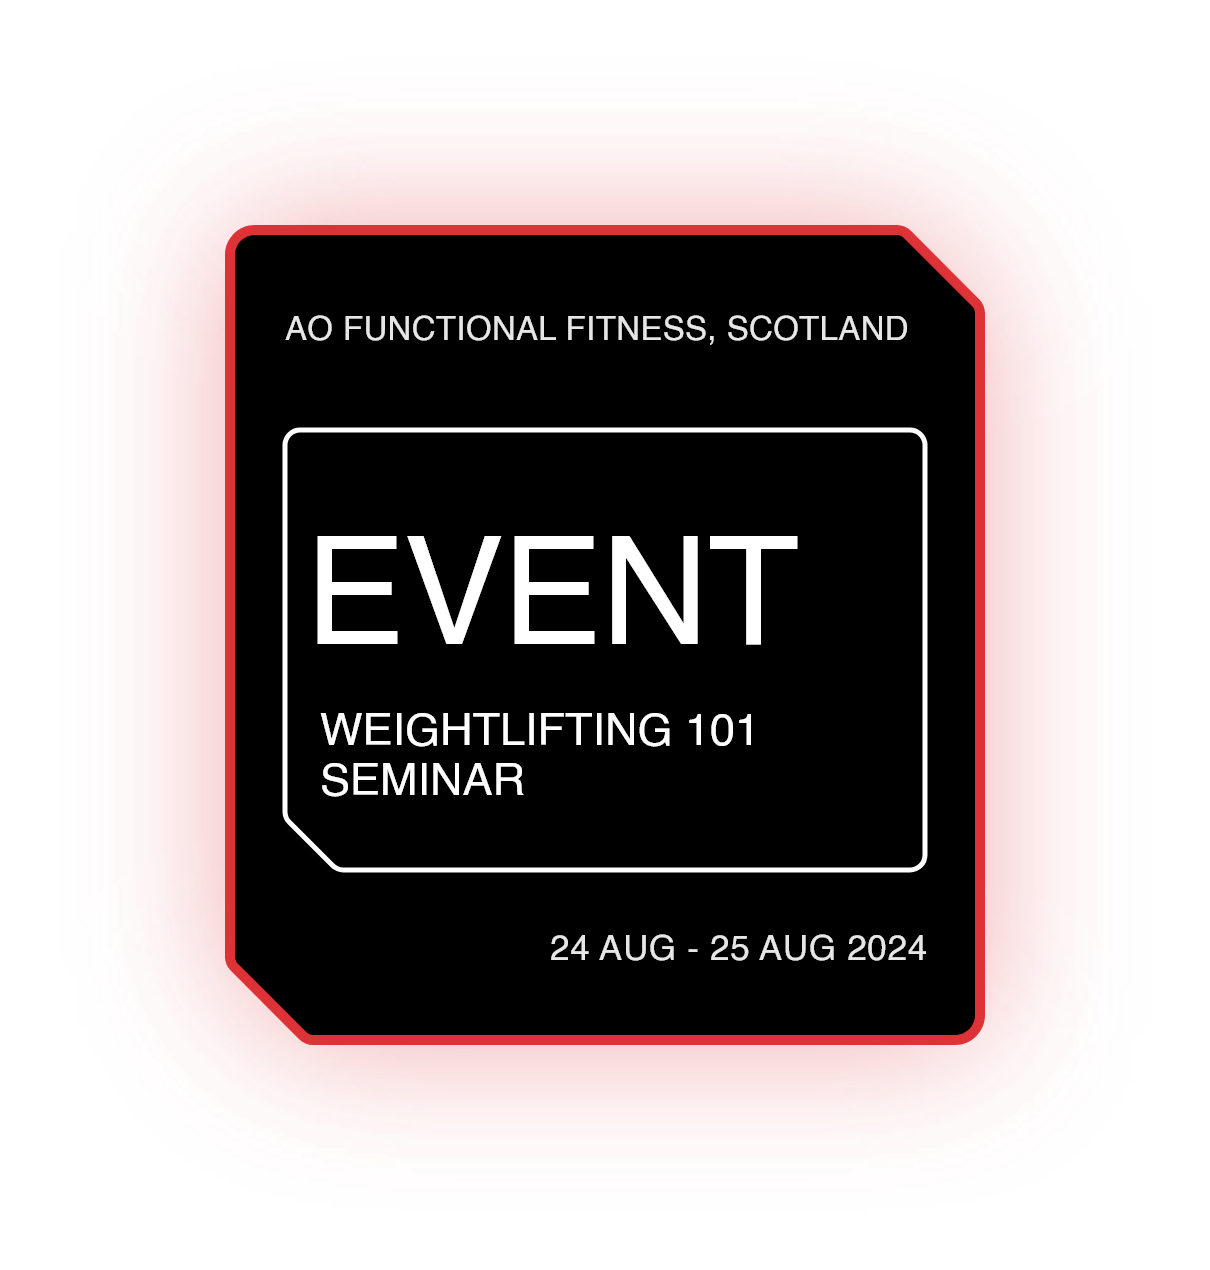 Weightlifting 101 Seminar - Coatbridge, Scotland